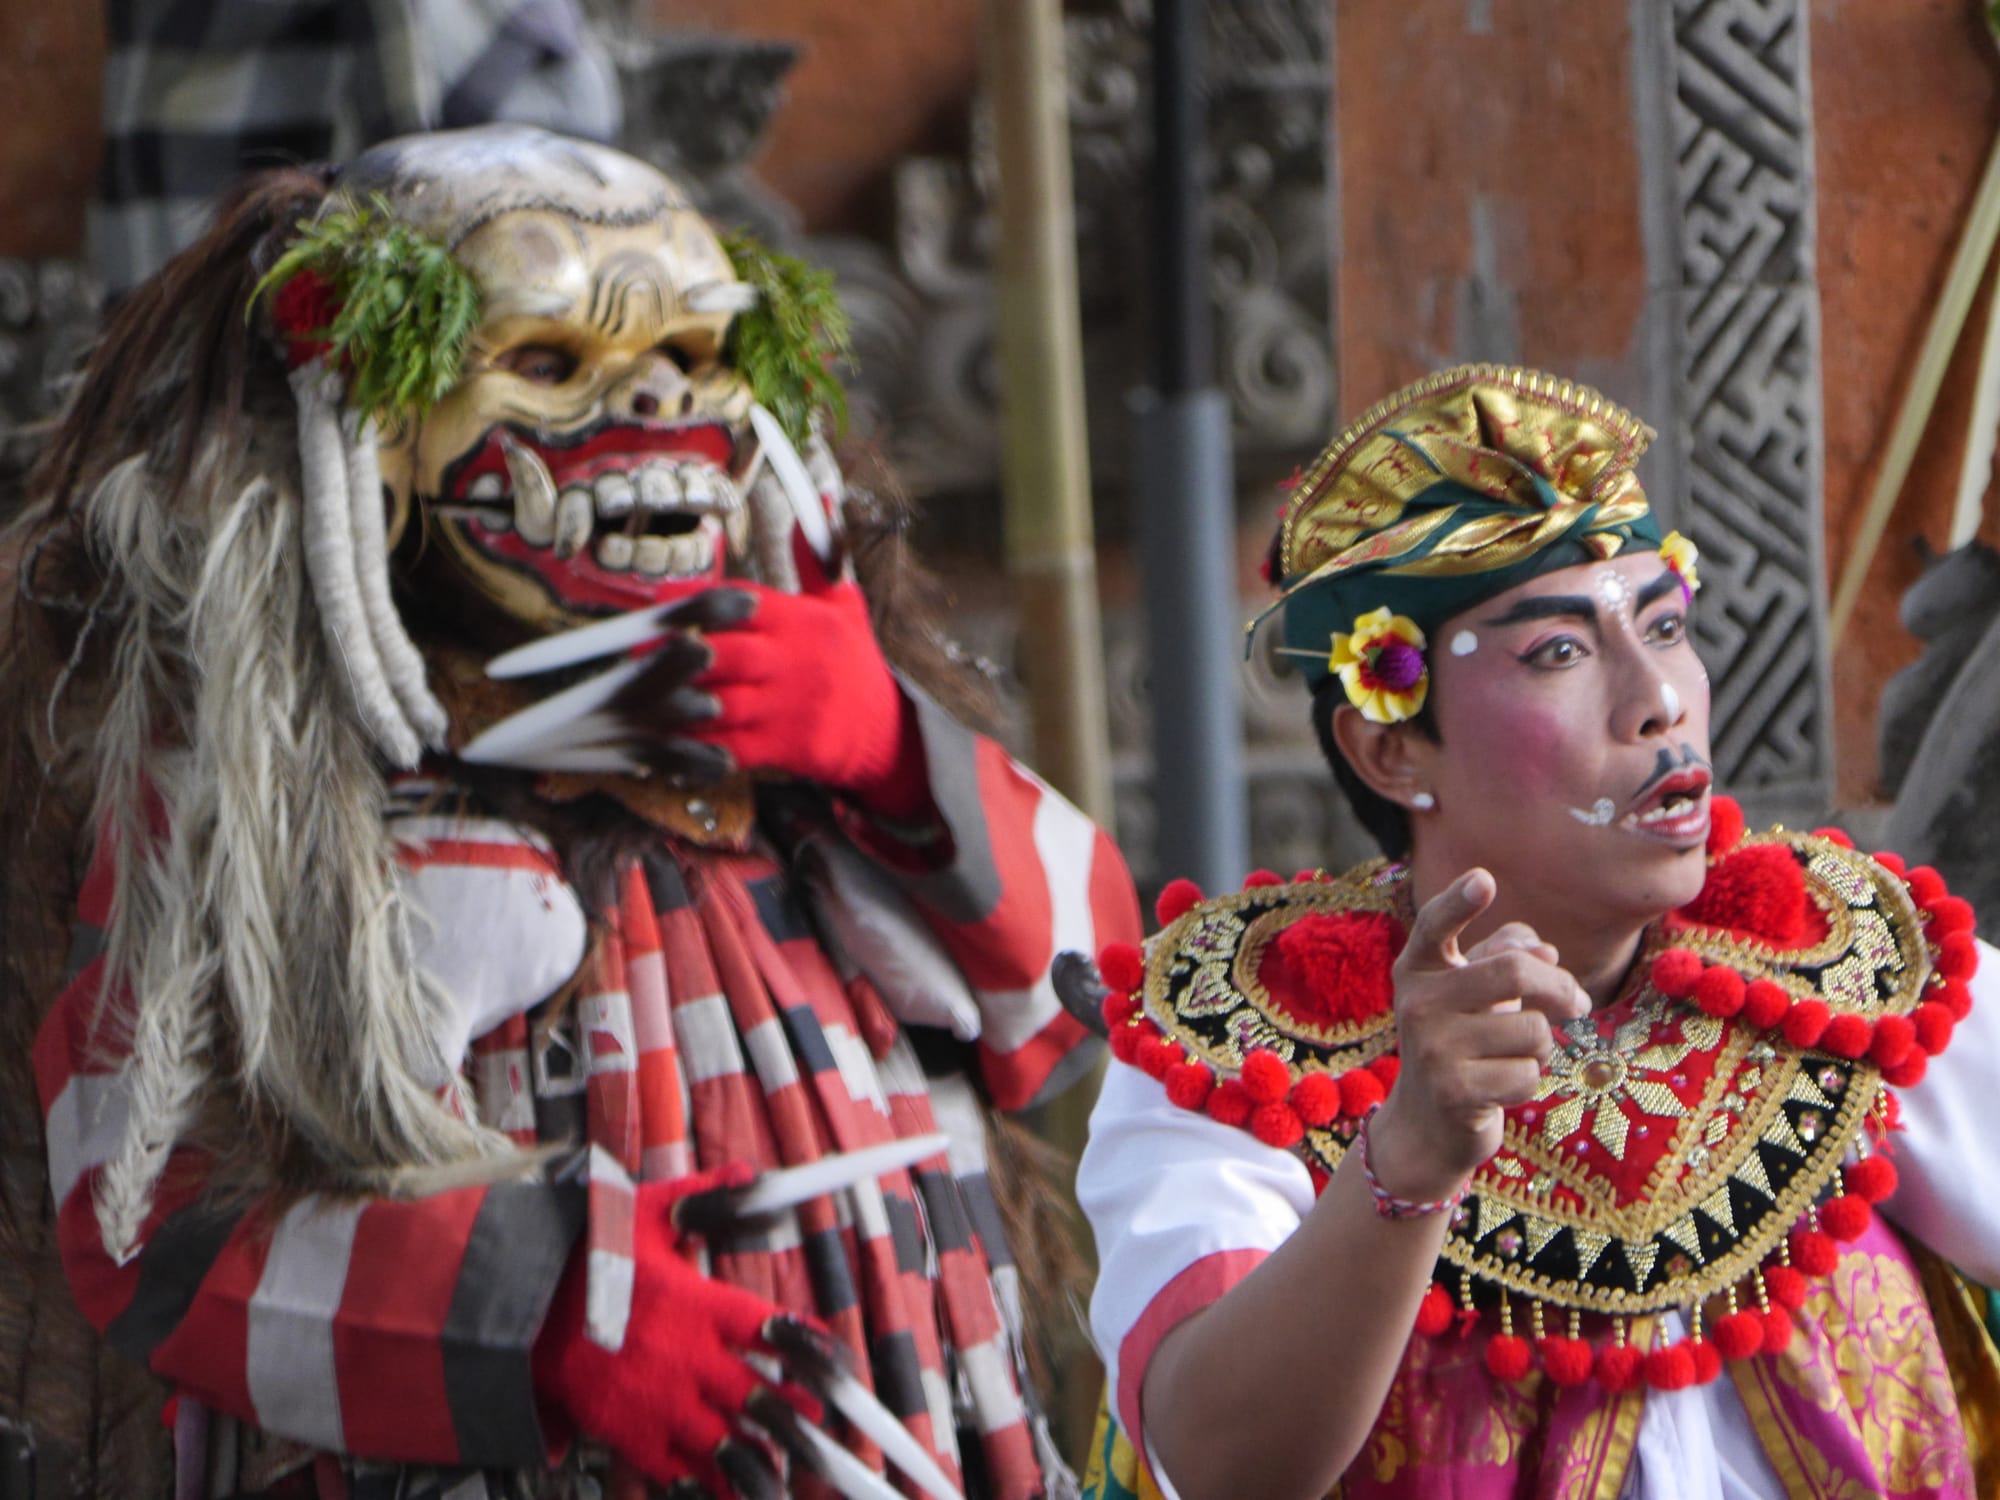 Photo by Author — Rangda sneaking up on a servant — Sahadewa Barong and Kris Dance, Bali, Indonesia